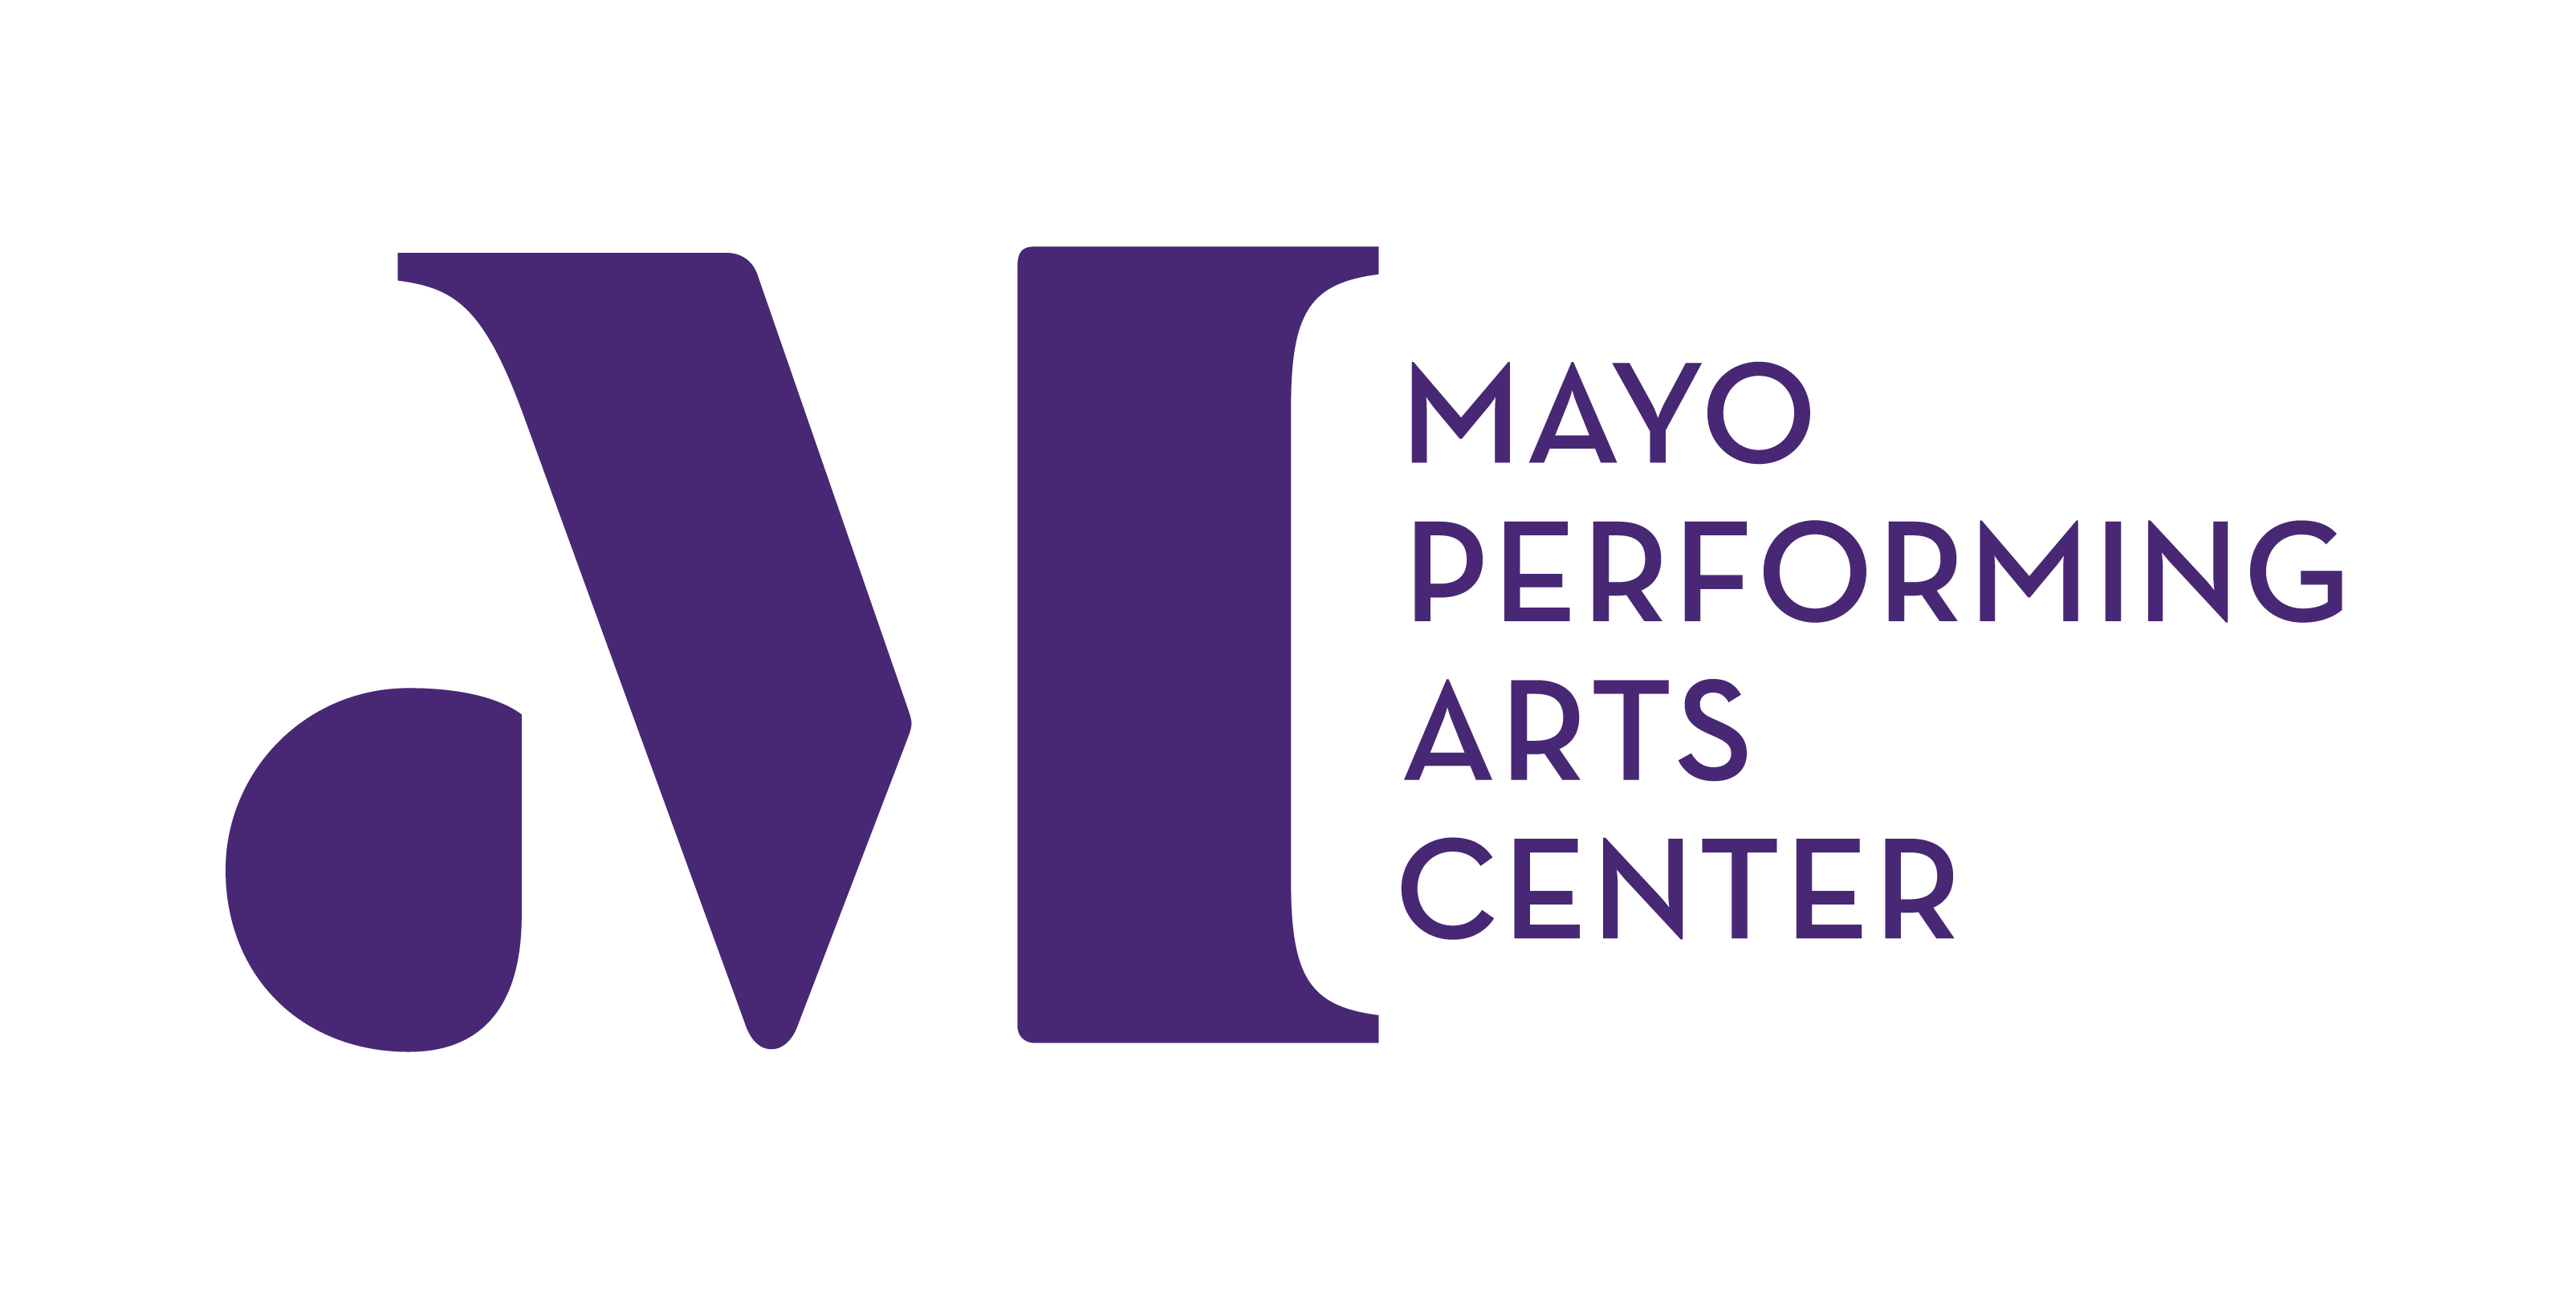 MPAC logo